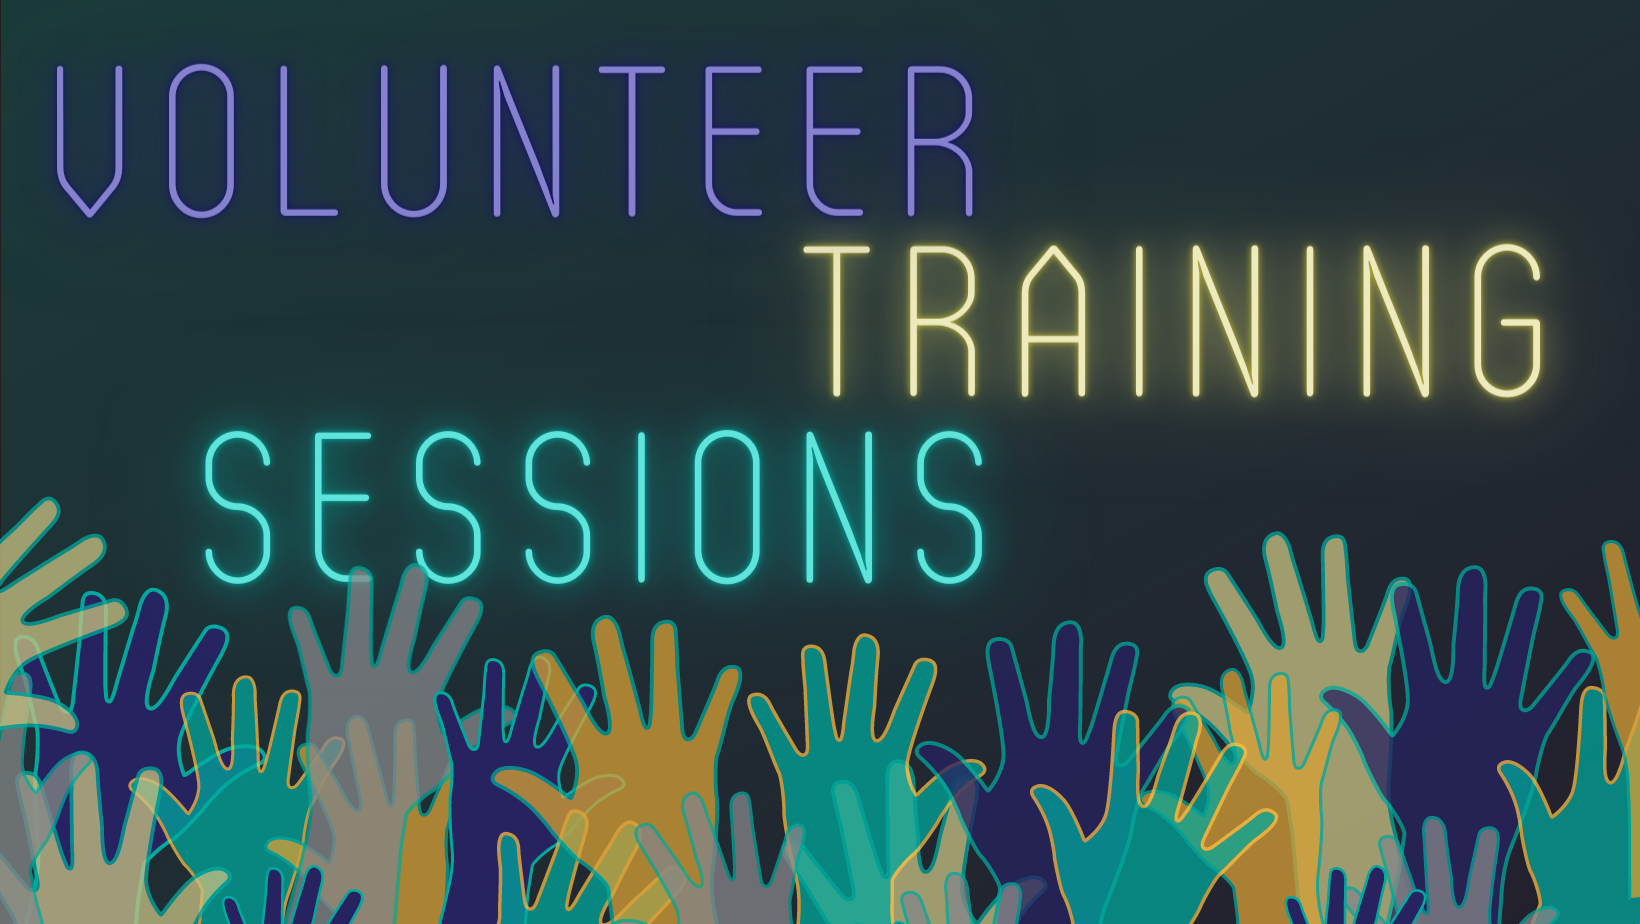 Volunteer Training Sessions Image